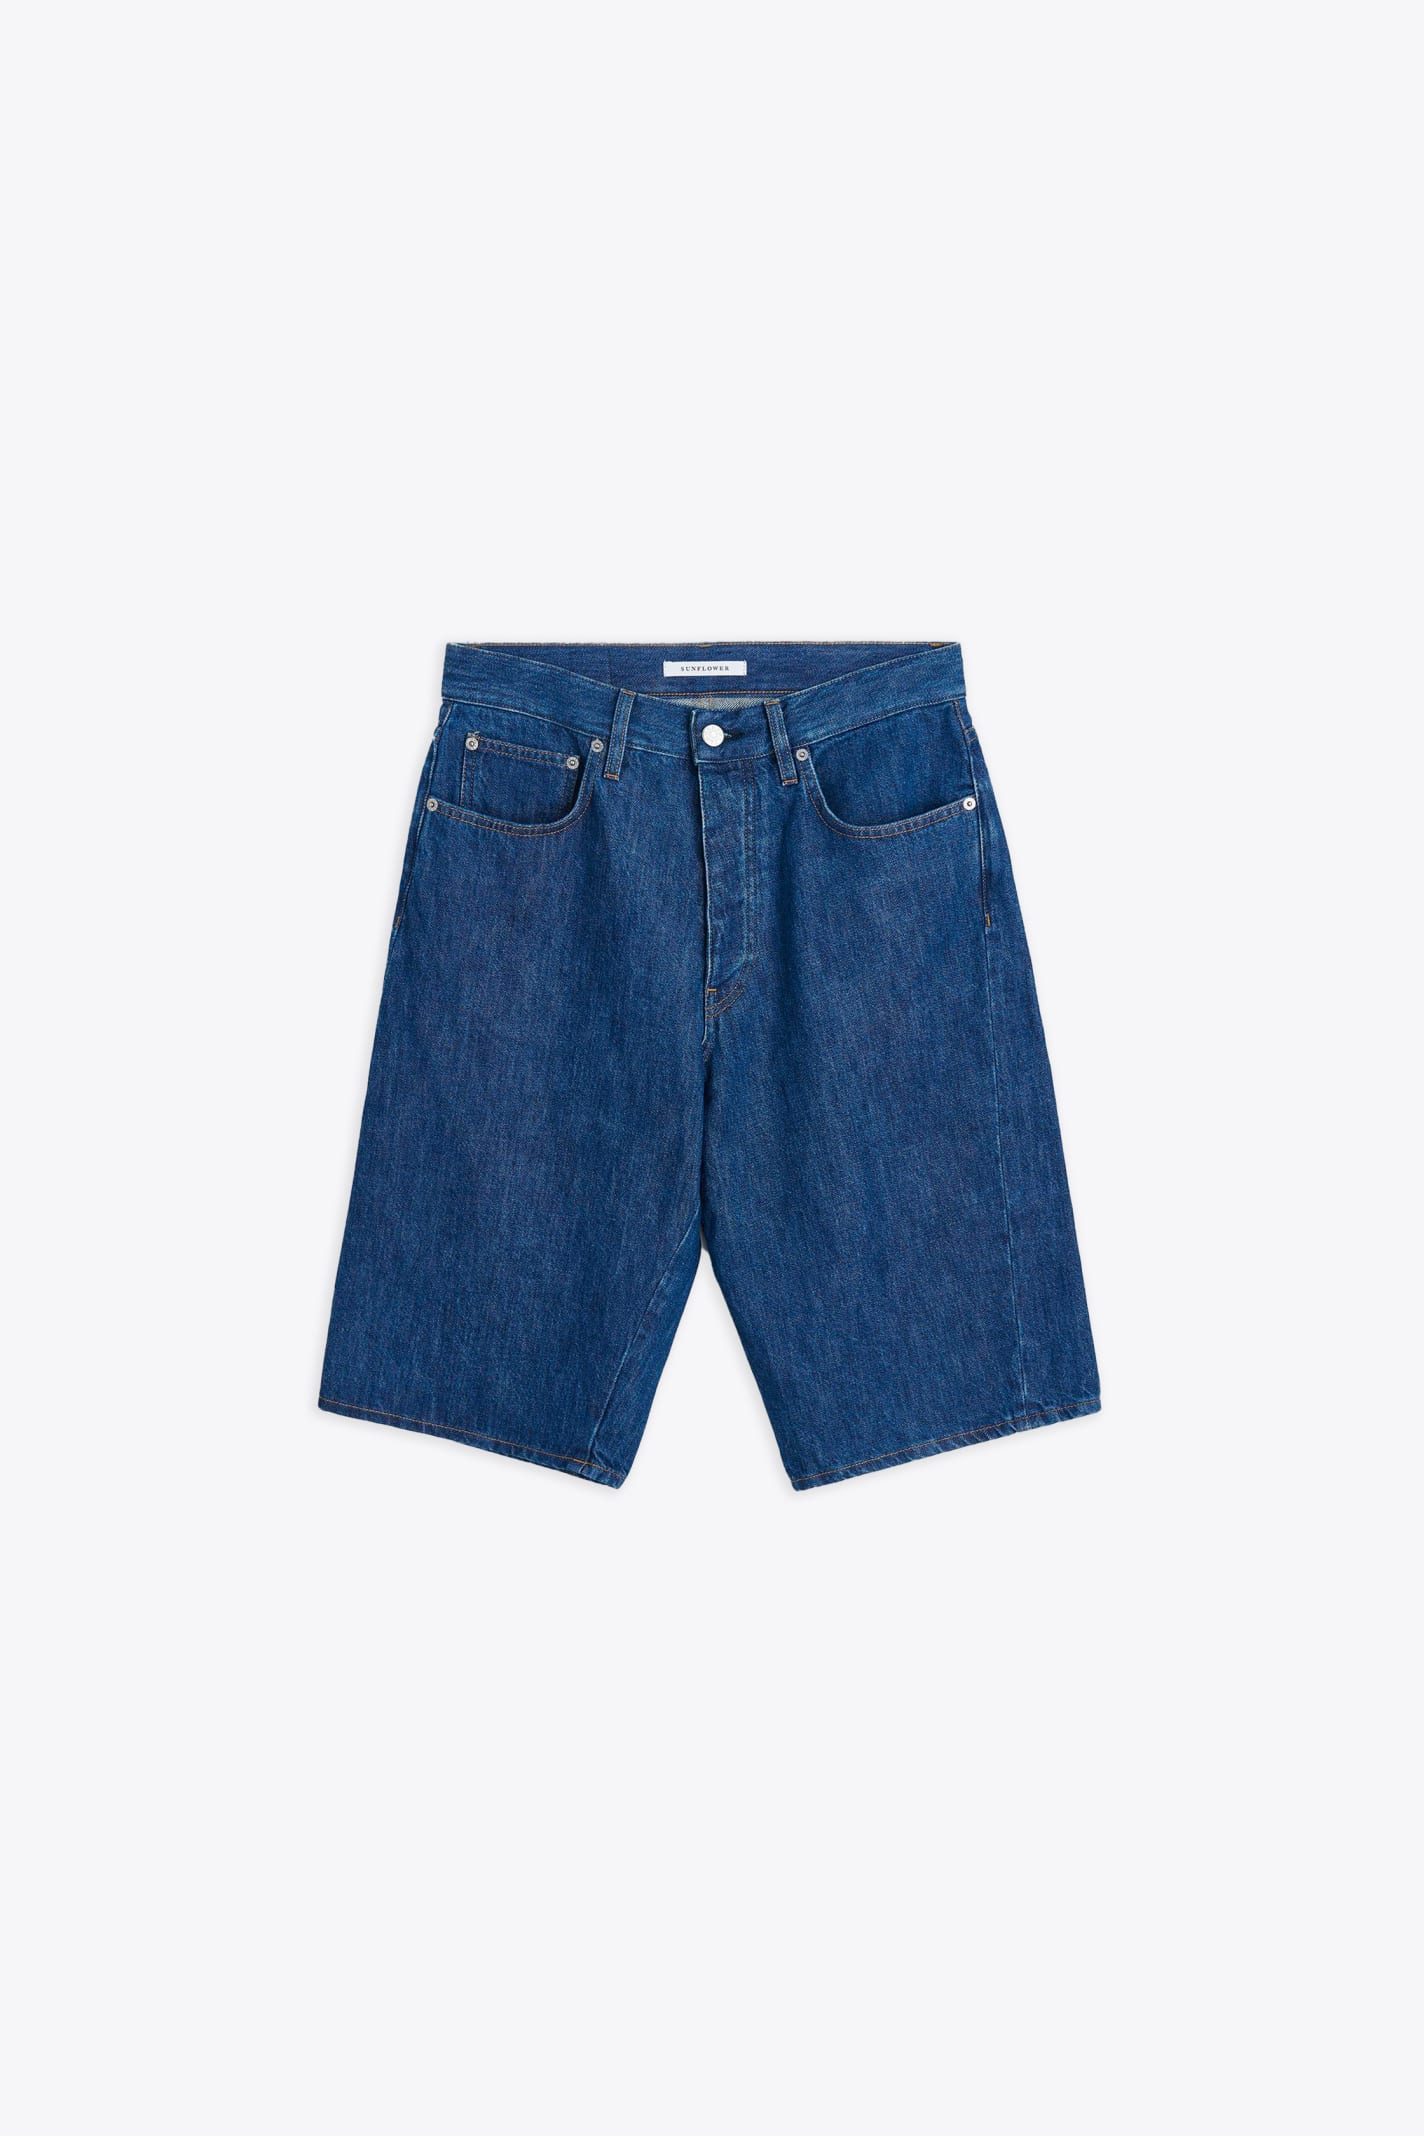 #5090 Blue rinse denim shorts - Wide Twist Shorts